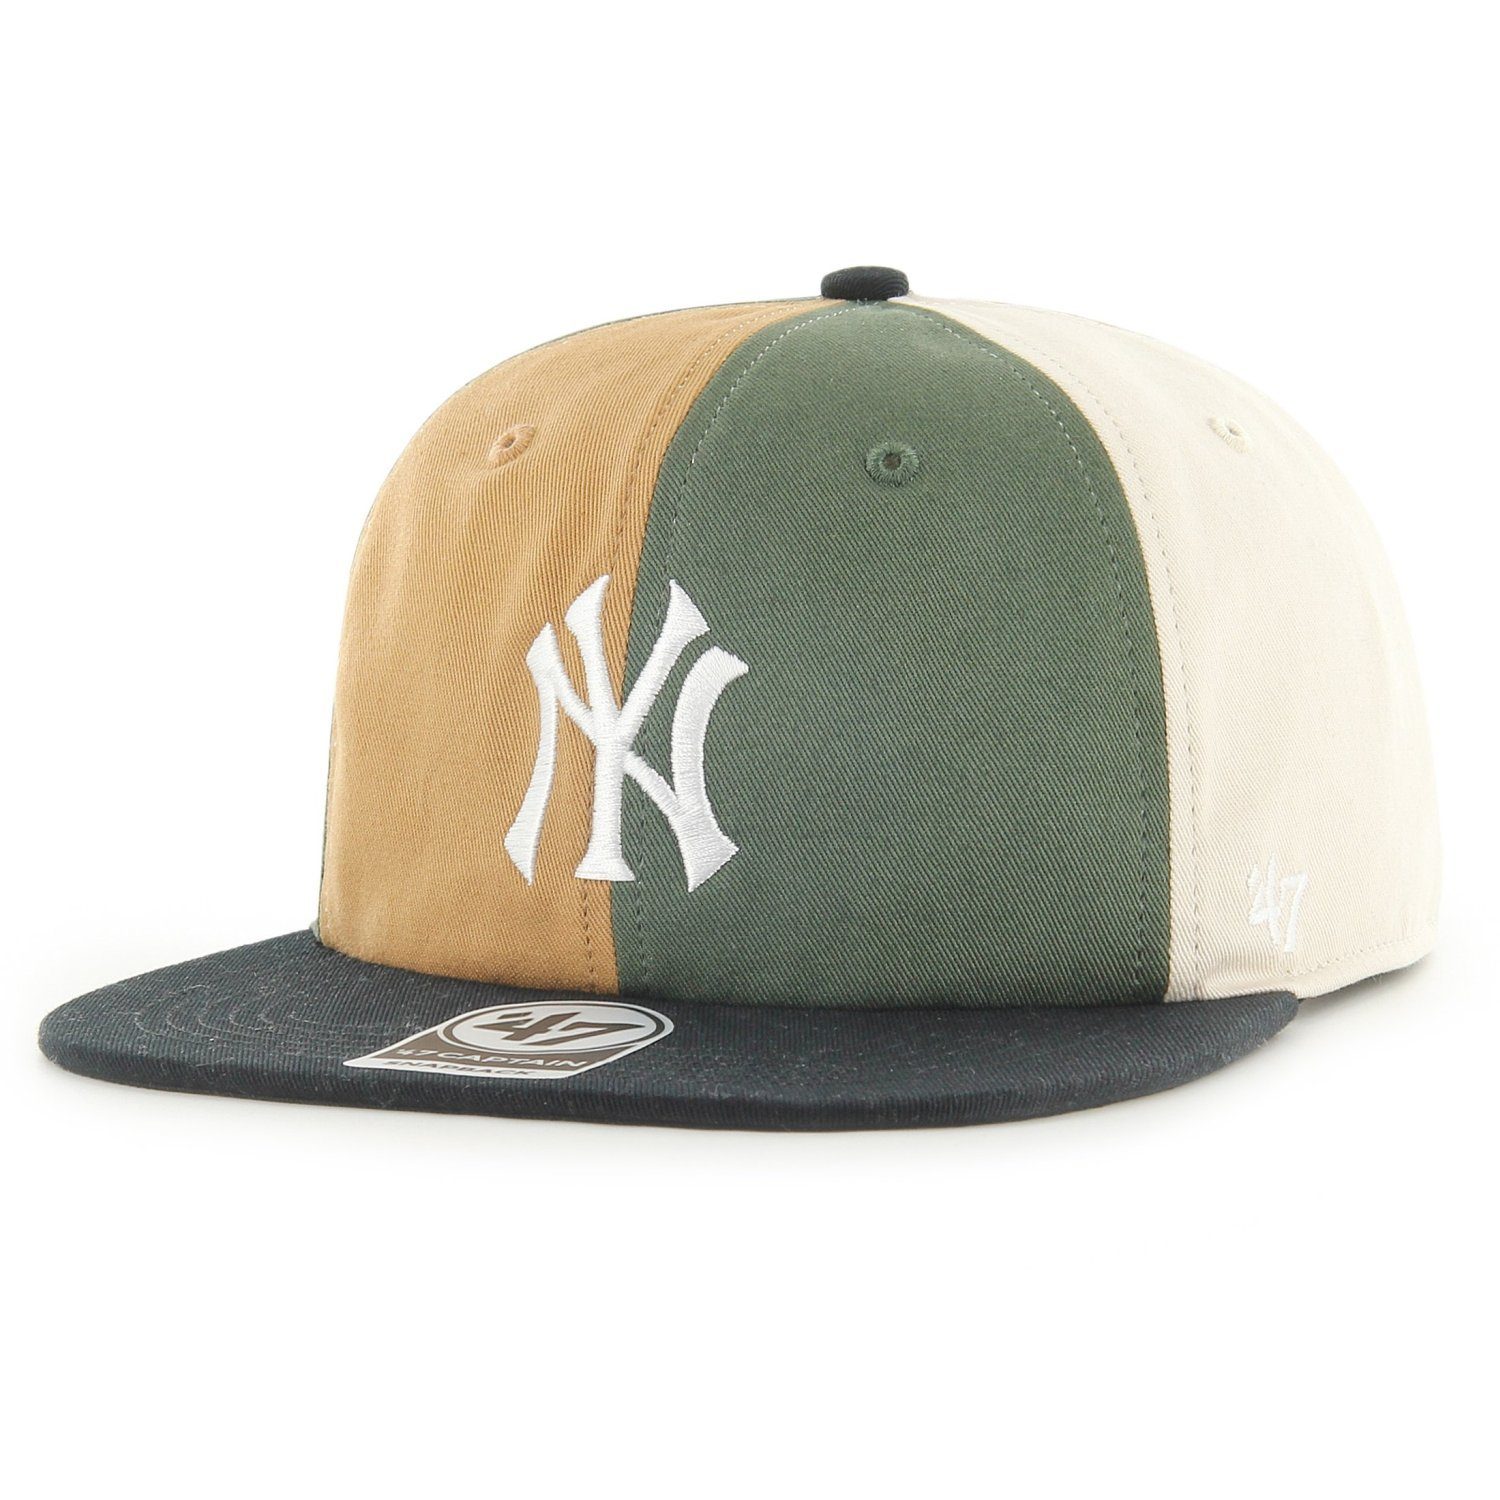 New MELROSE Cap Snapback Yankees '47 Brand York Captain